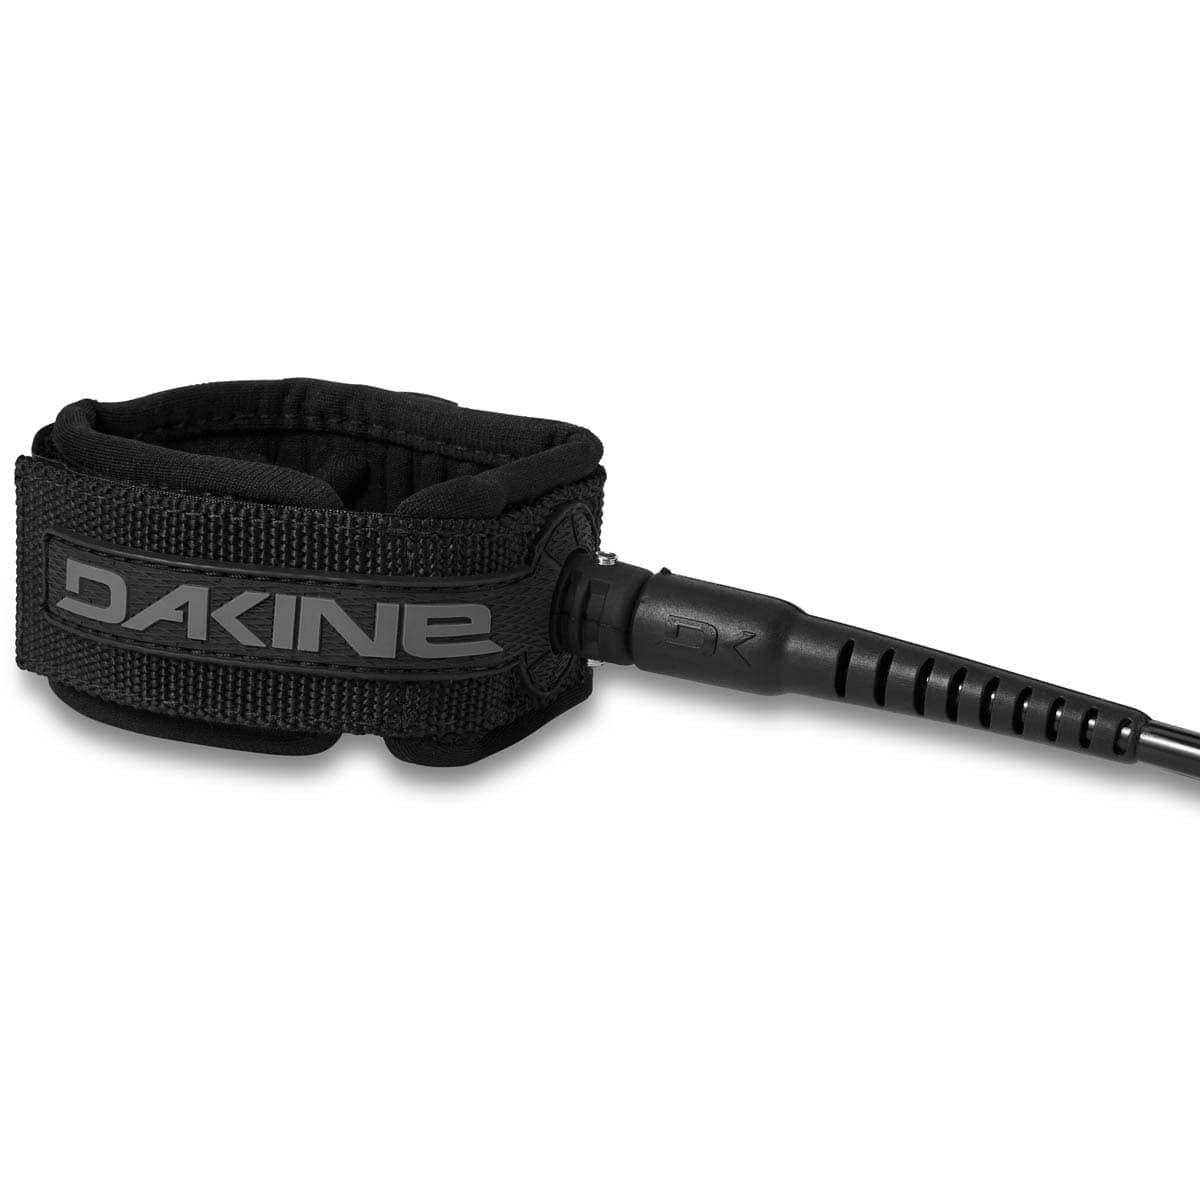 Dakine - Pro Comp 6' x 3/16'' Leash | Electric Tropical -  - Married to the Sea Surf Shop - 